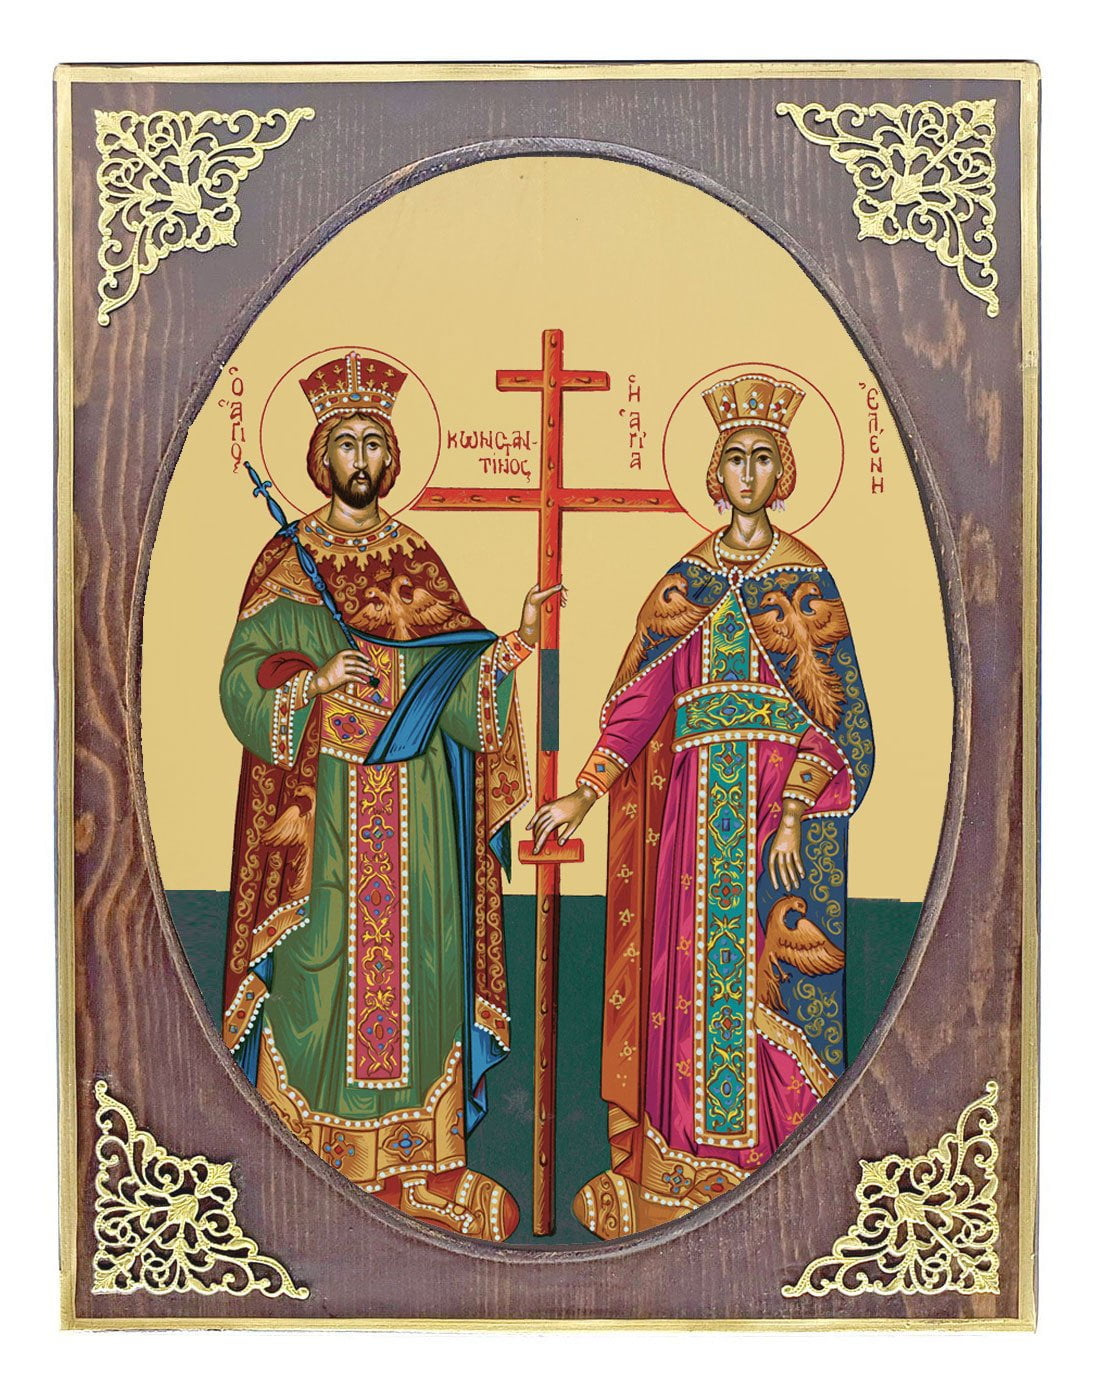 Handmade Orthodox Icon Saints Constantine and Helen mirror effect